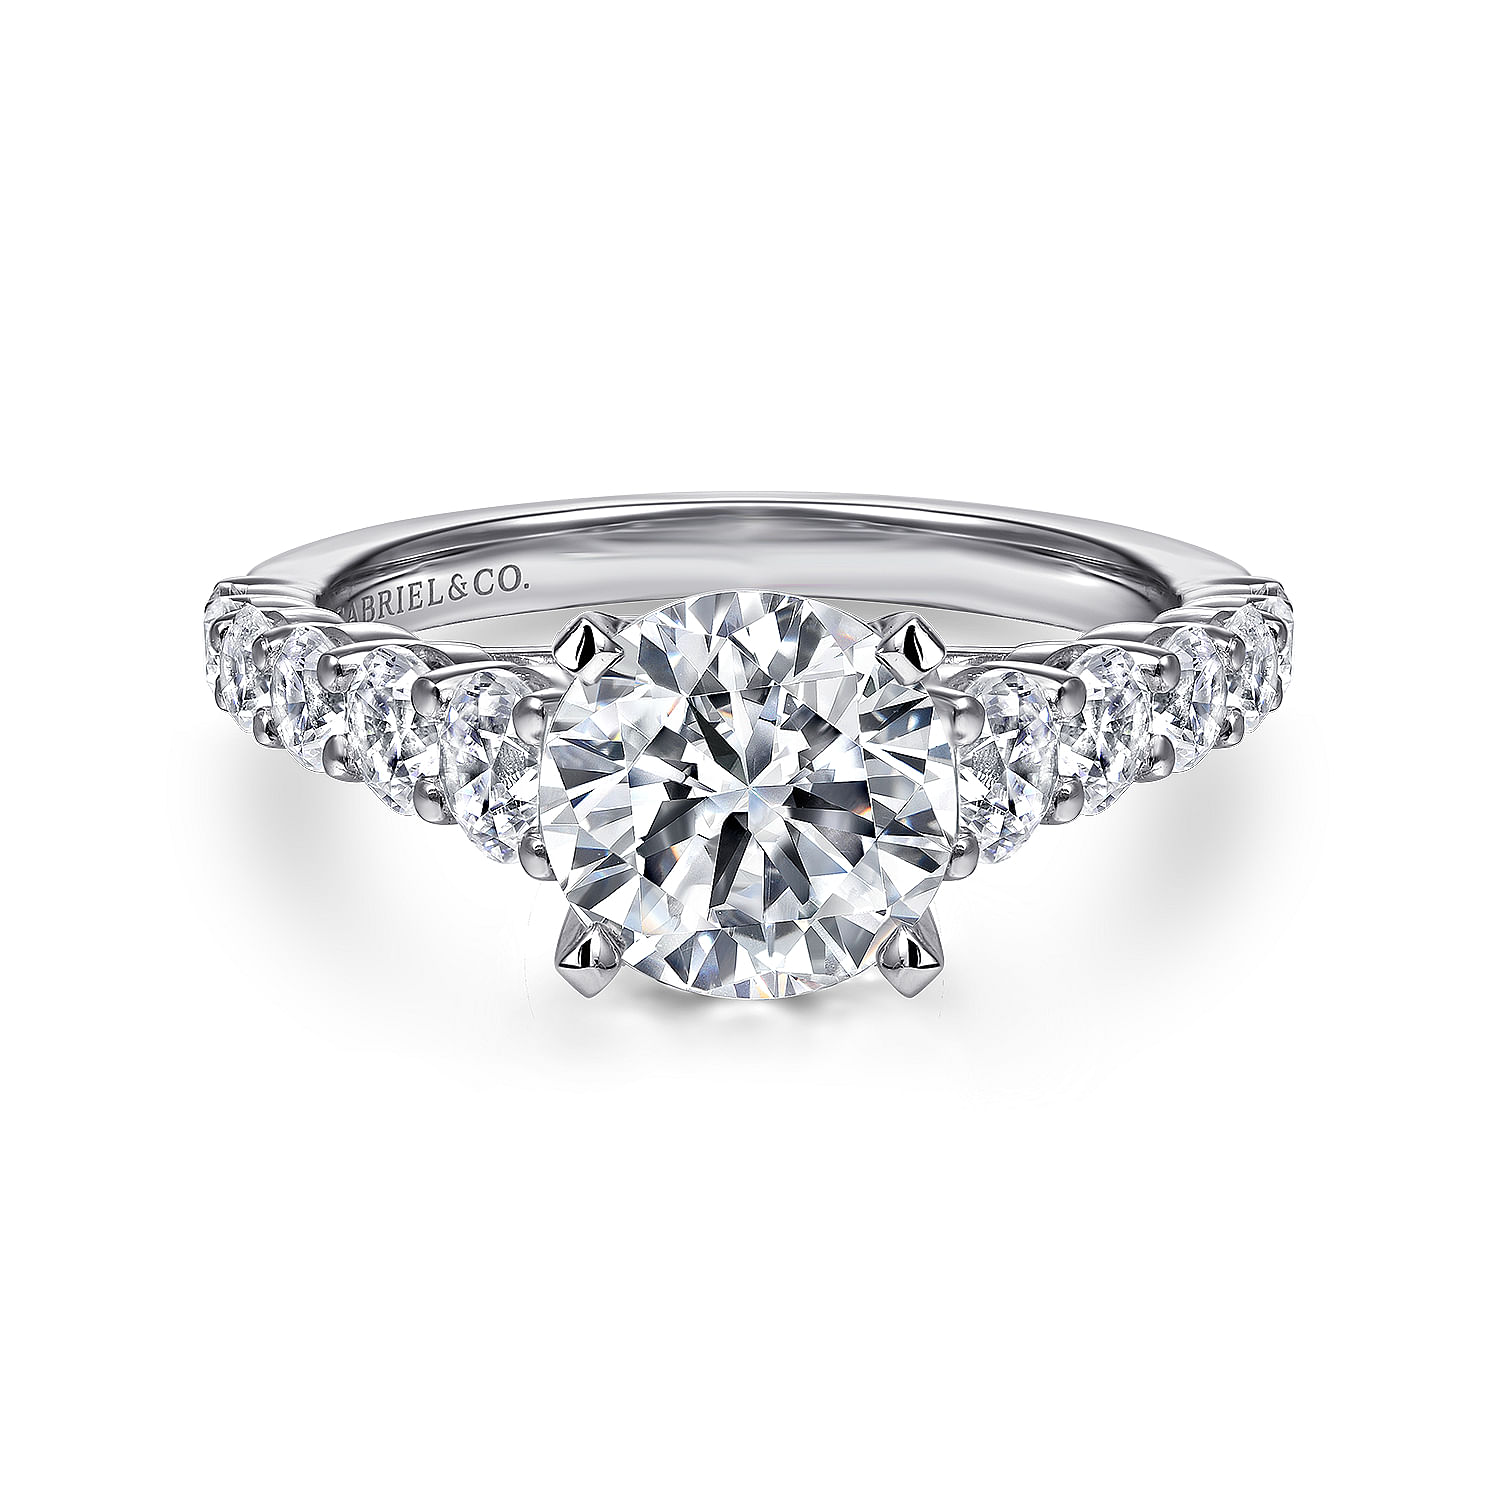 Taylor - 14K White Gold Round Diamond Engagement Ring